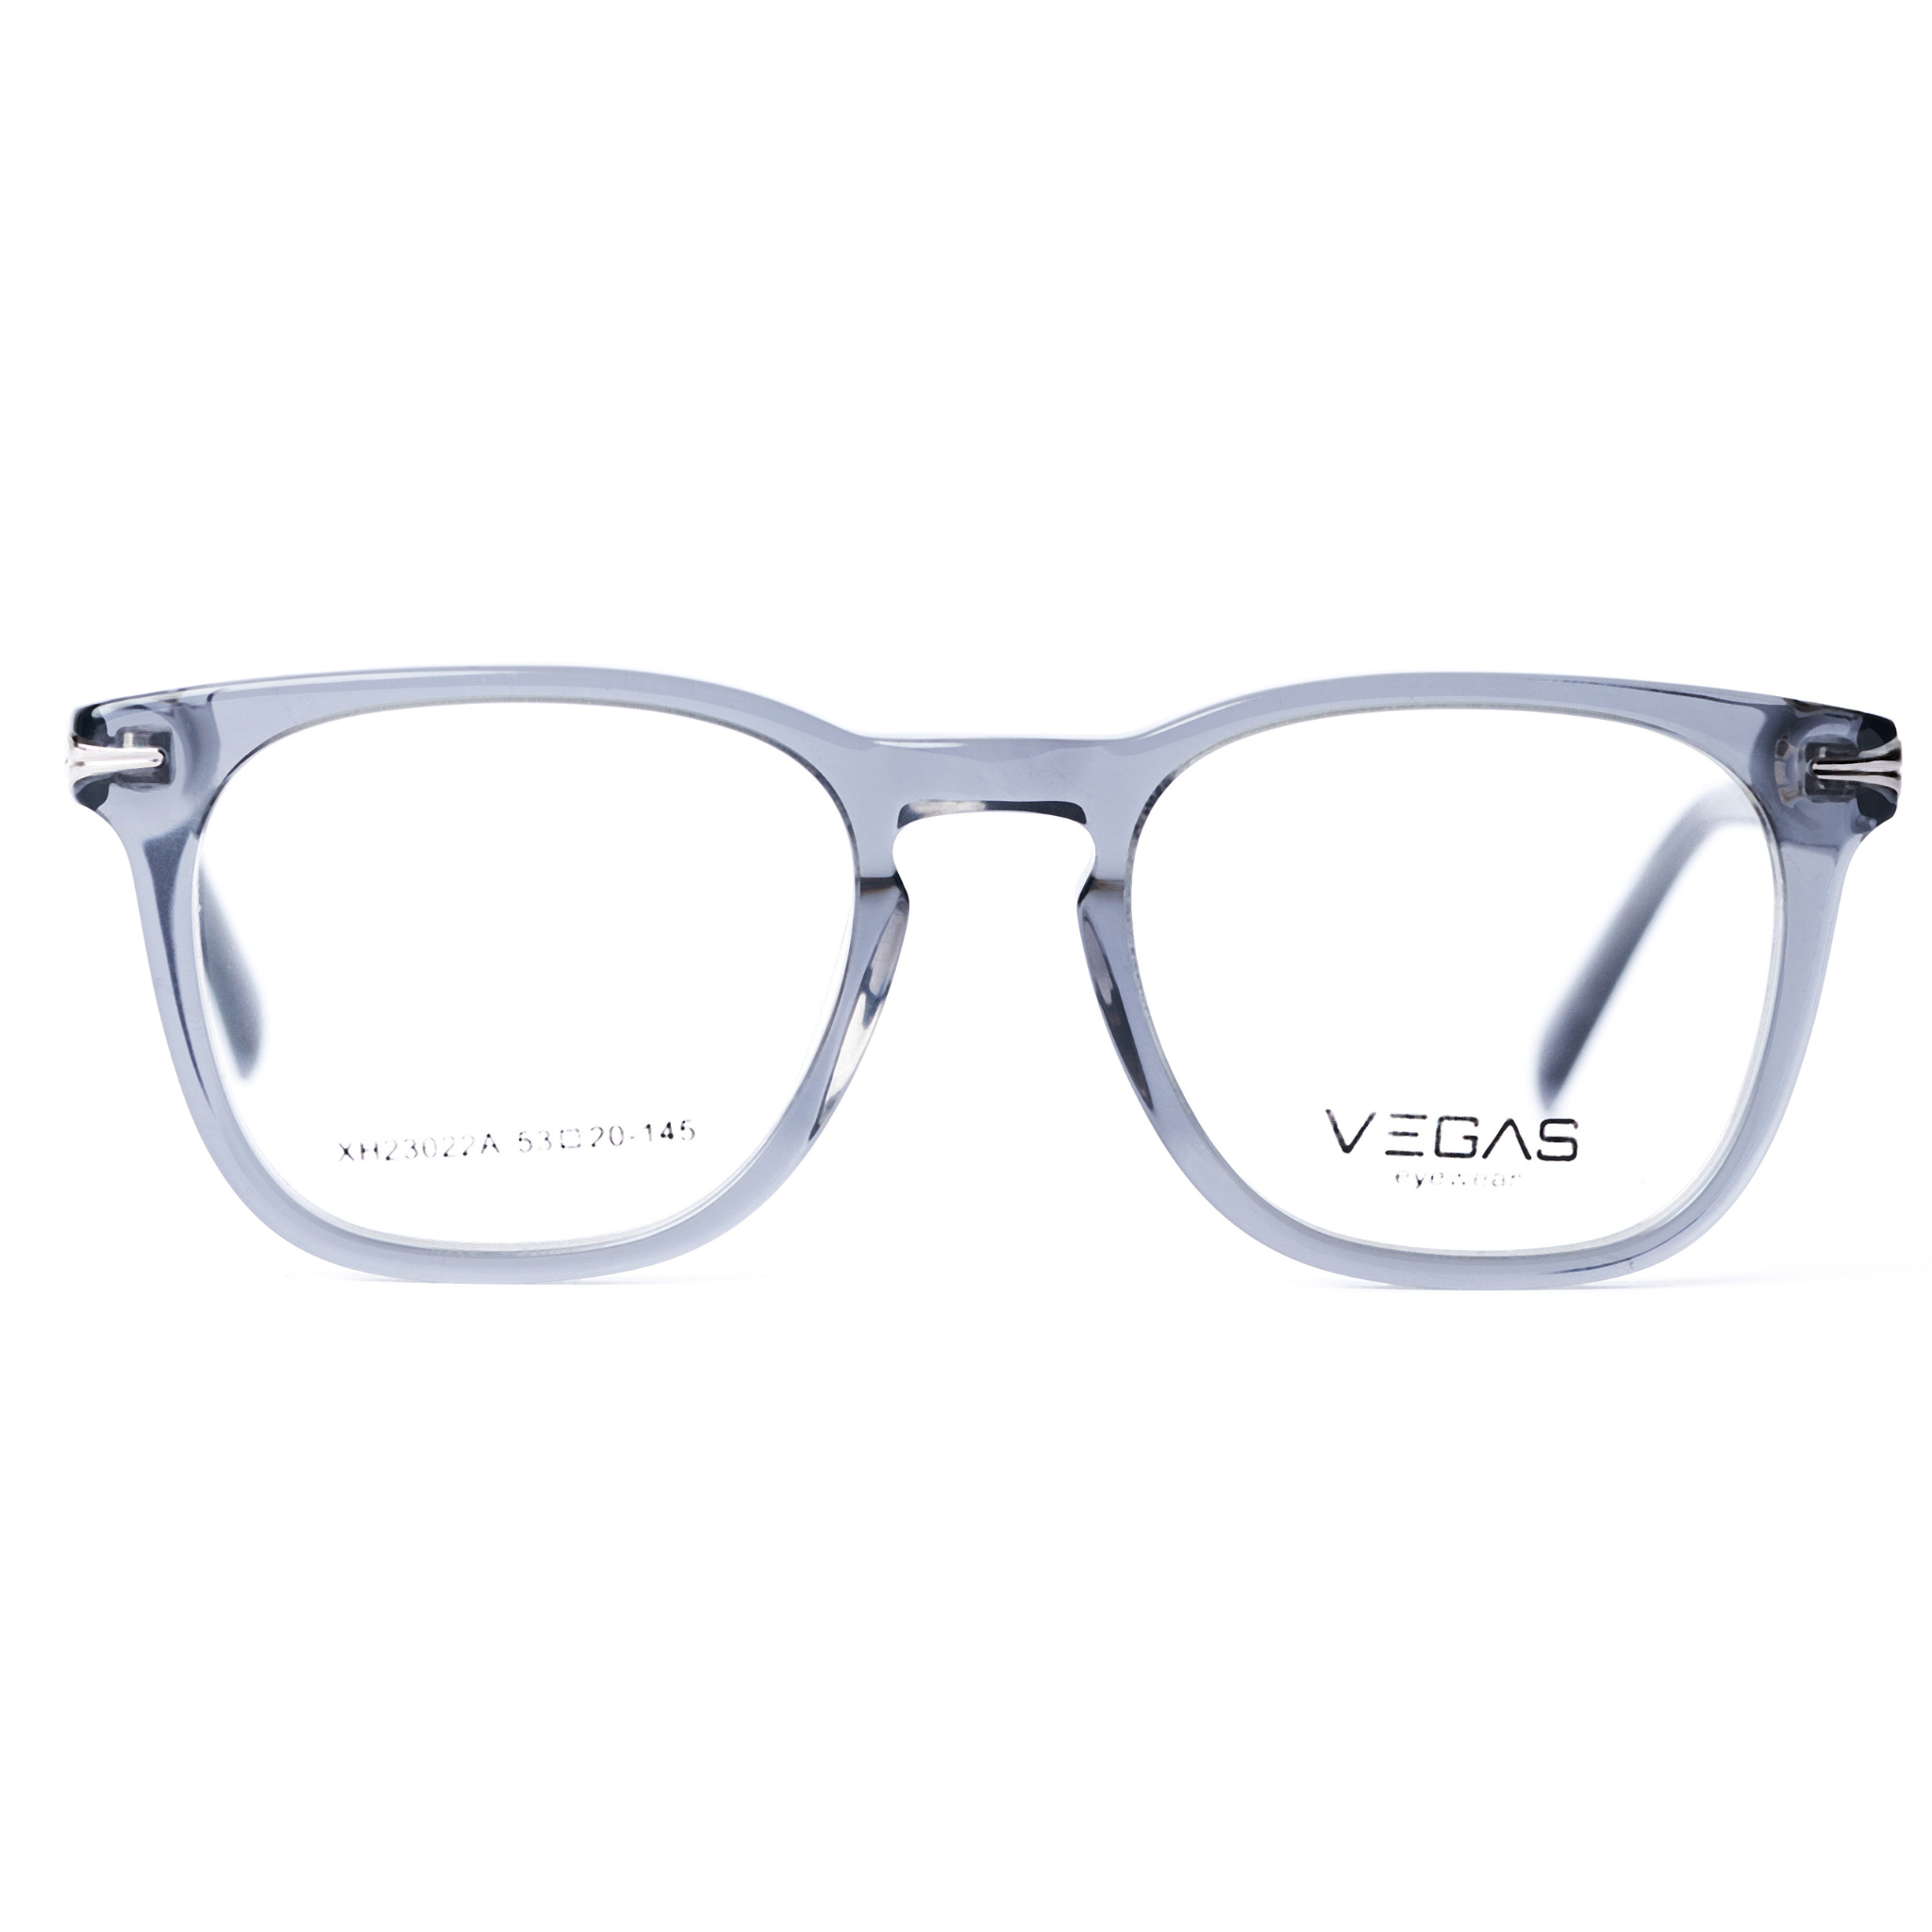 Eyeglasses| Vegas XH23022A